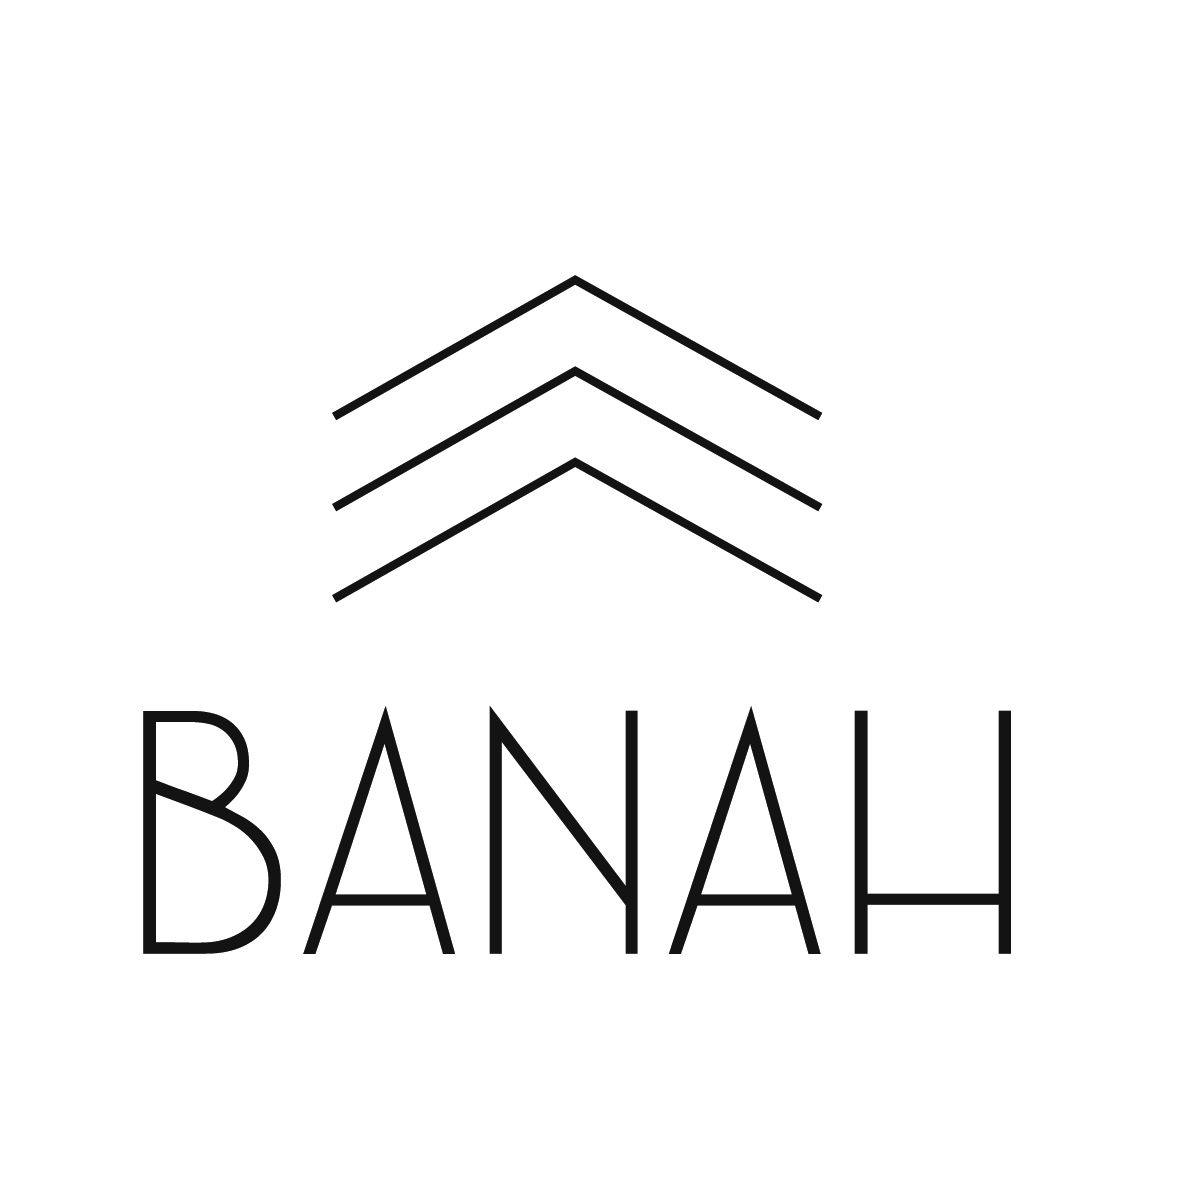 Banah Digital HackerNoon profile picture